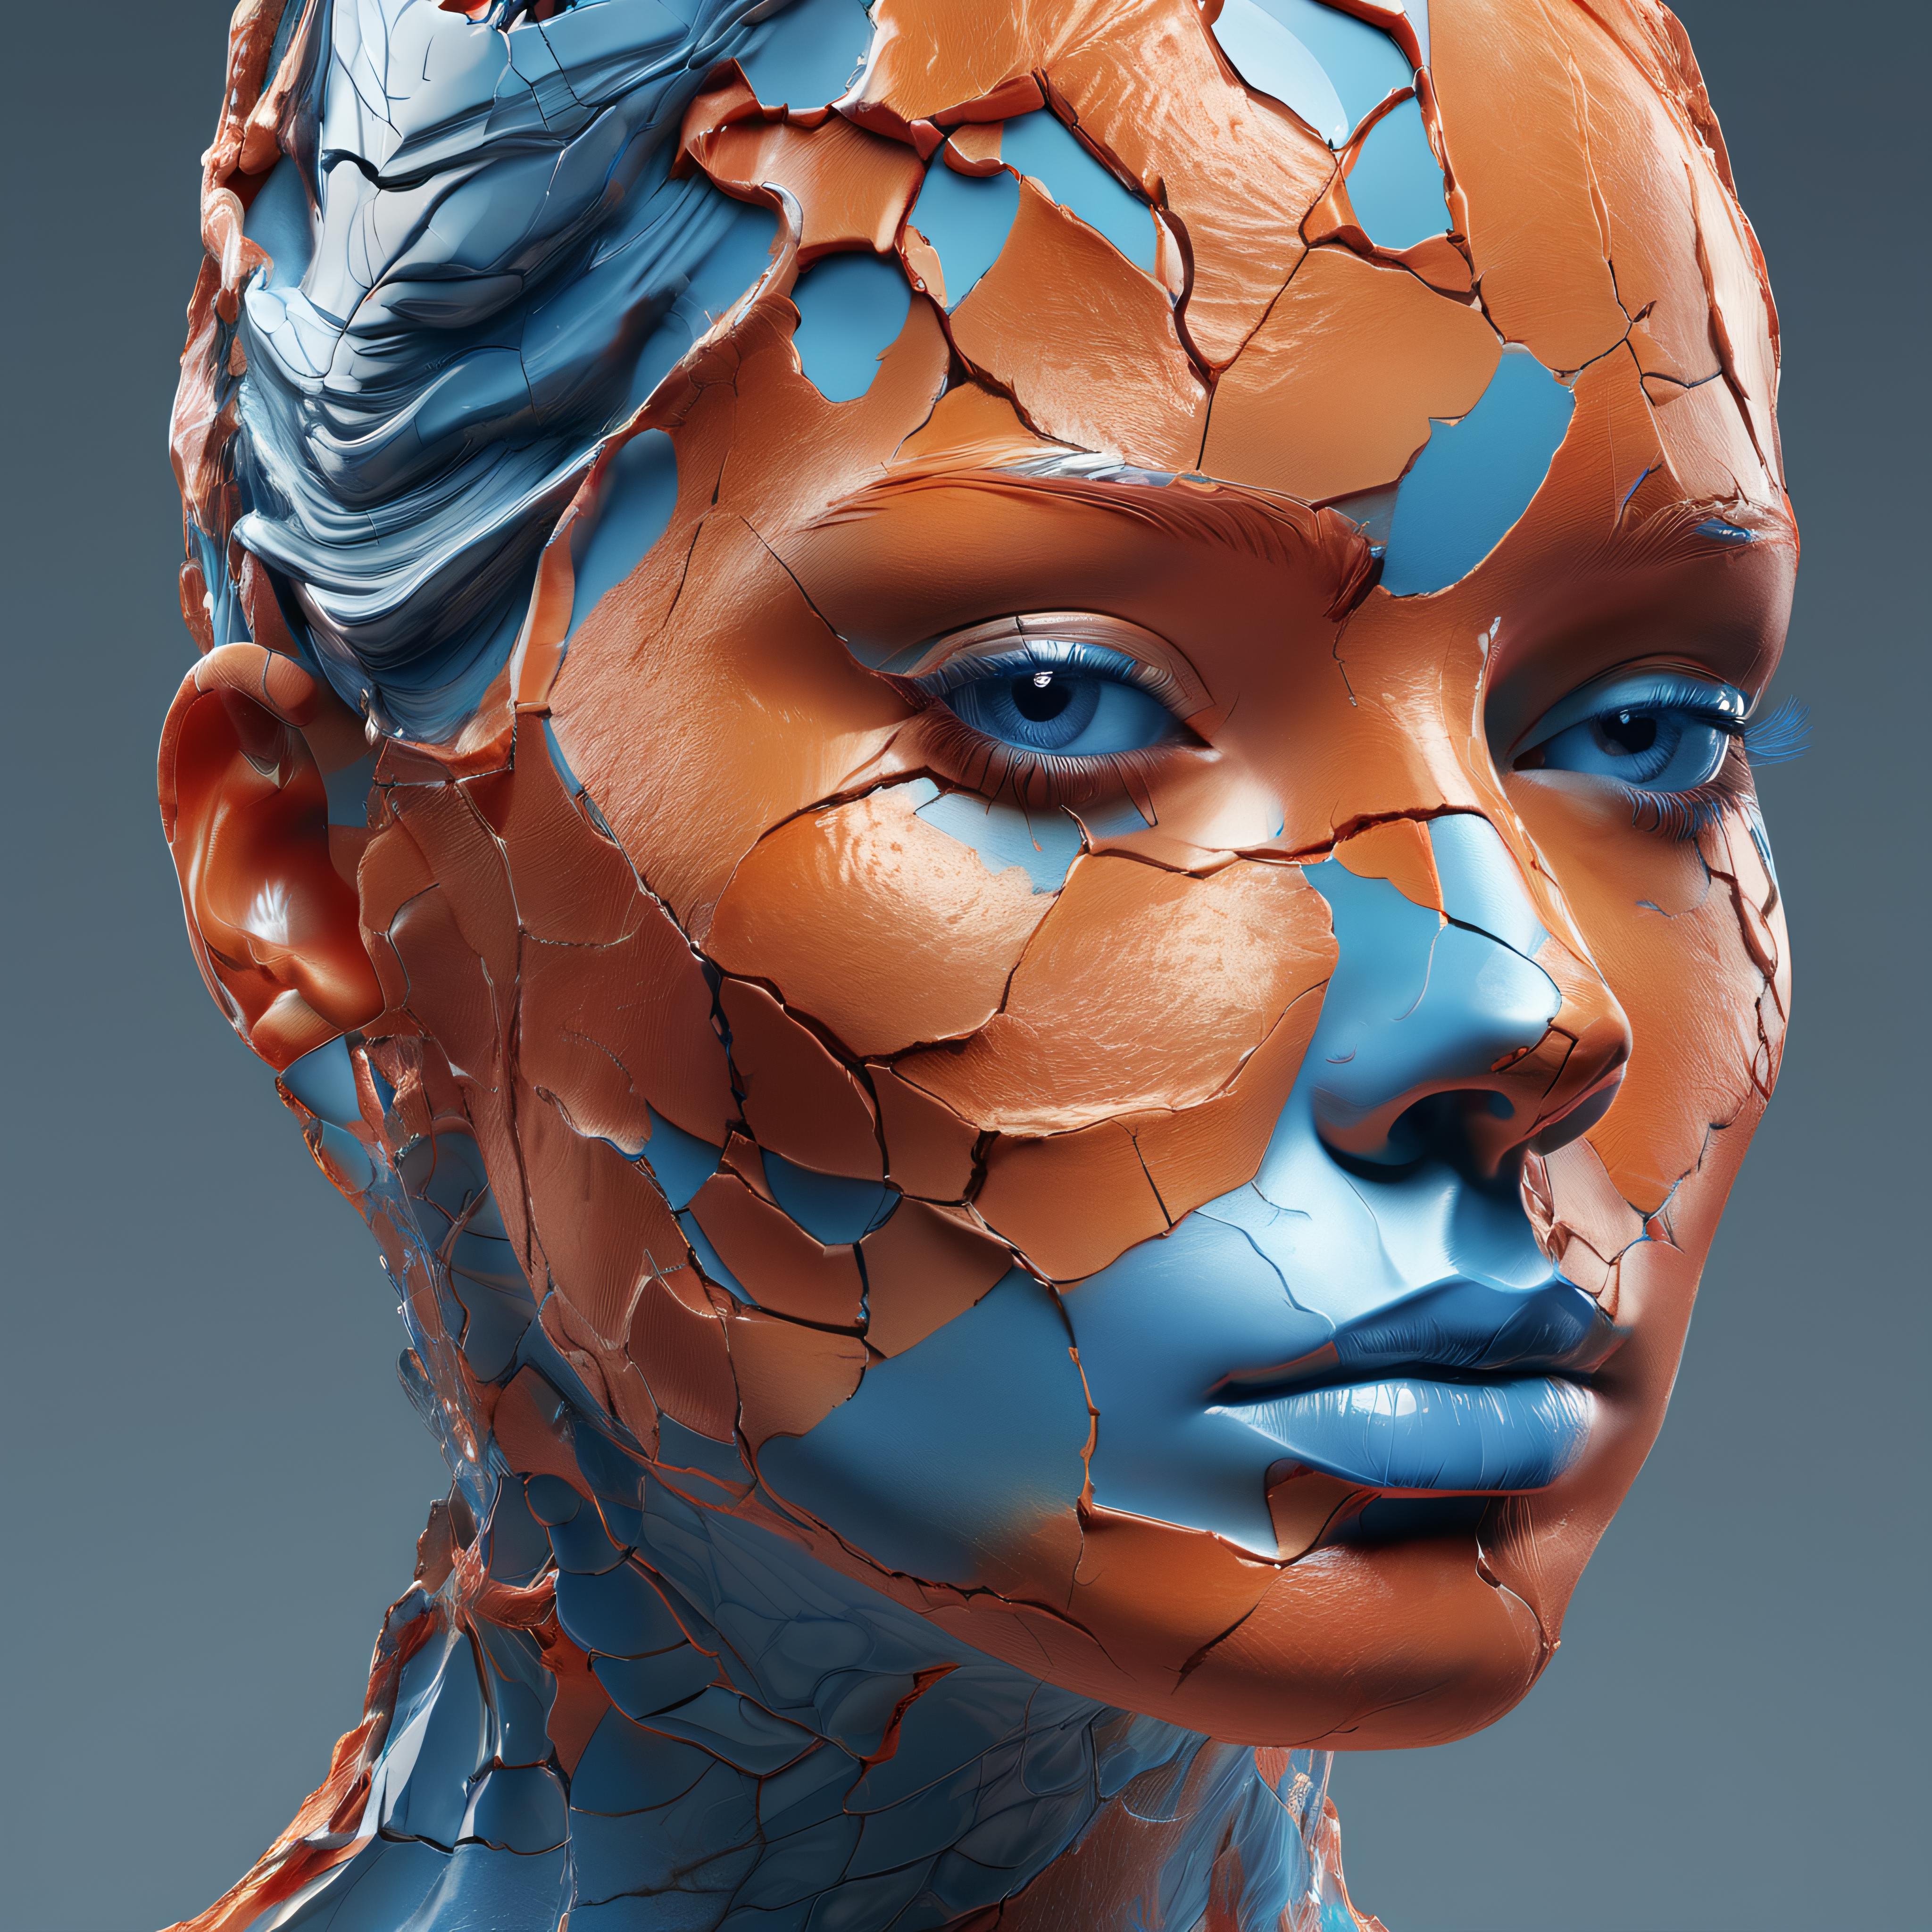 AI model image by C3RBERUS